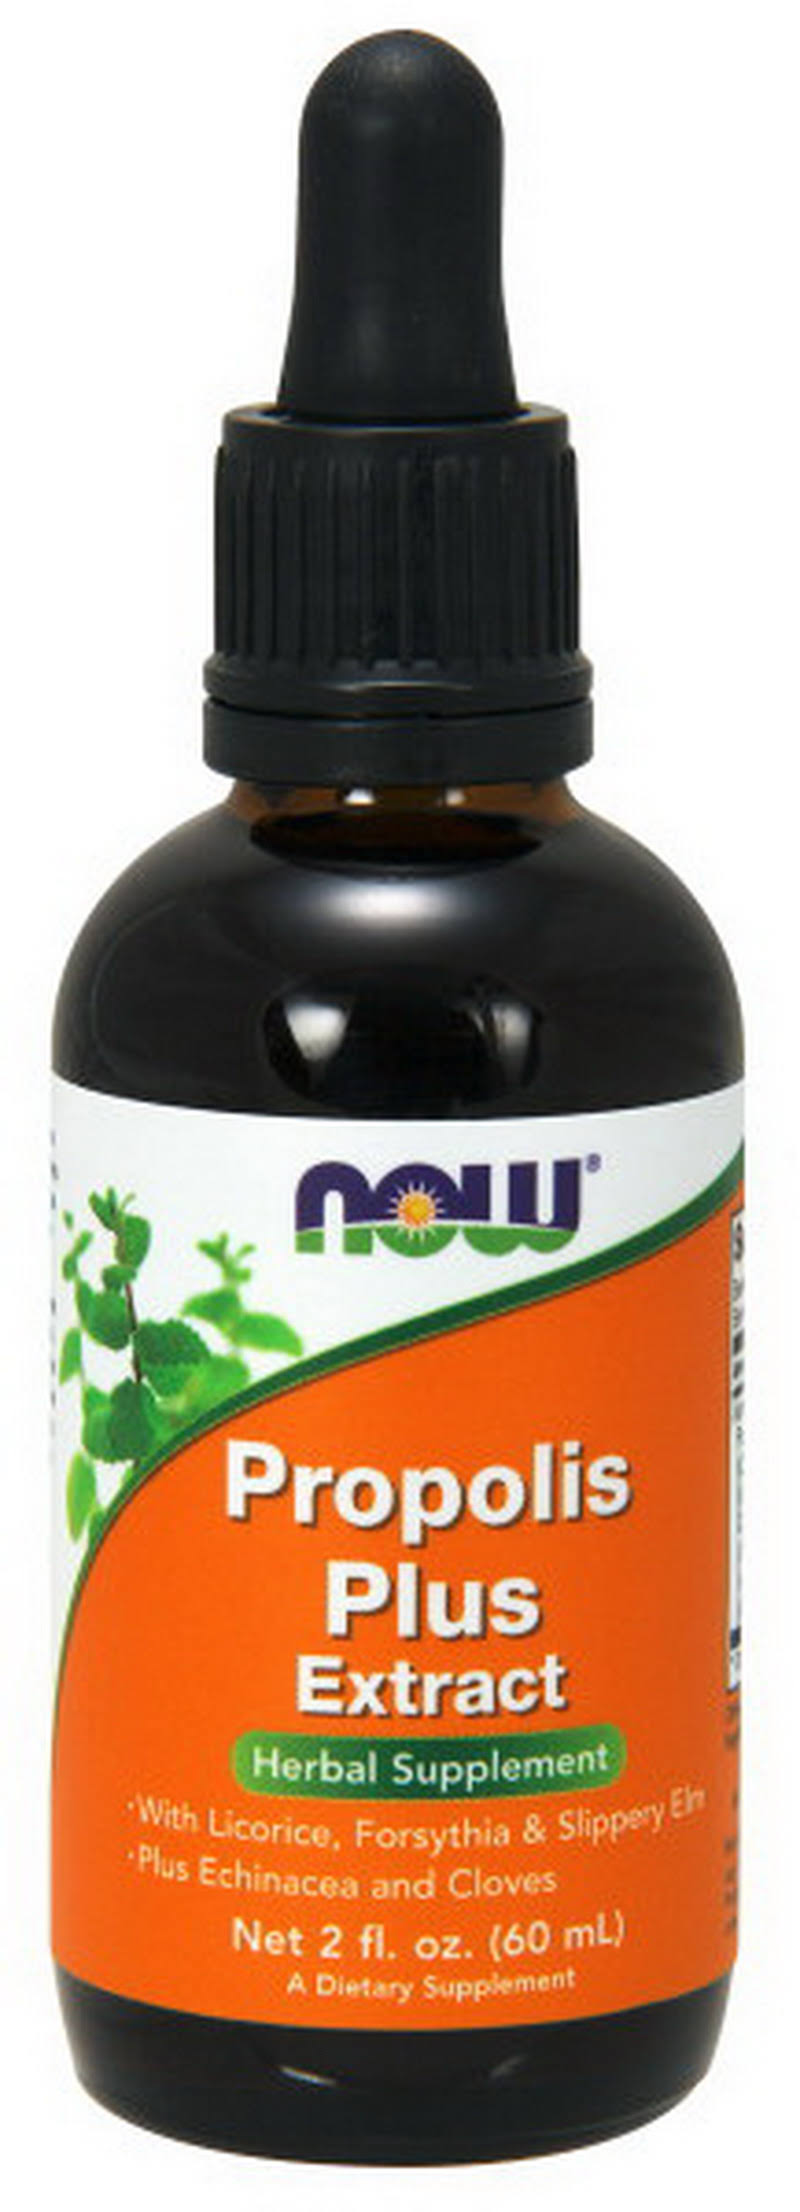 Now Foods Propolis Plus Extract Supplement - 2oz